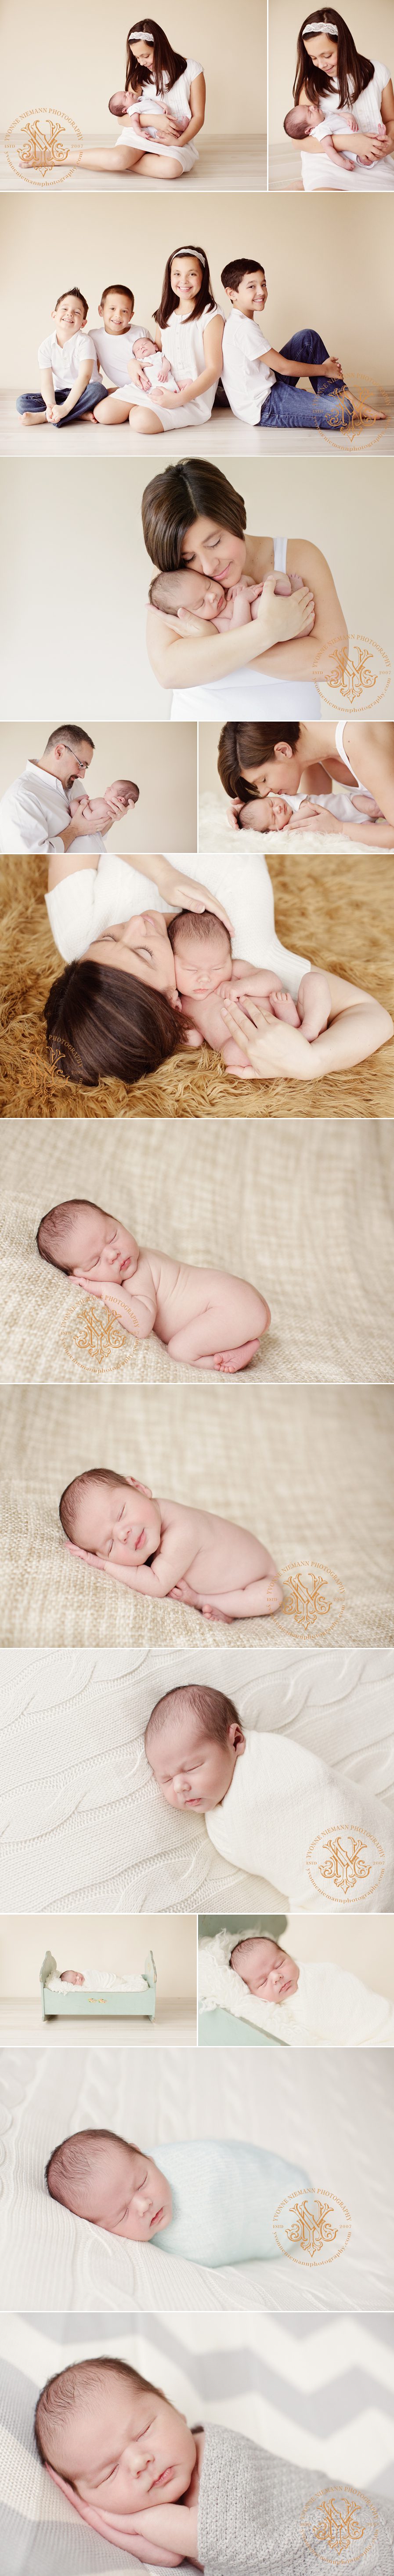 Simply beautiful newborn photos of a baby boy taken by Yvonne Niemann Photography in O'Fallon, MO.